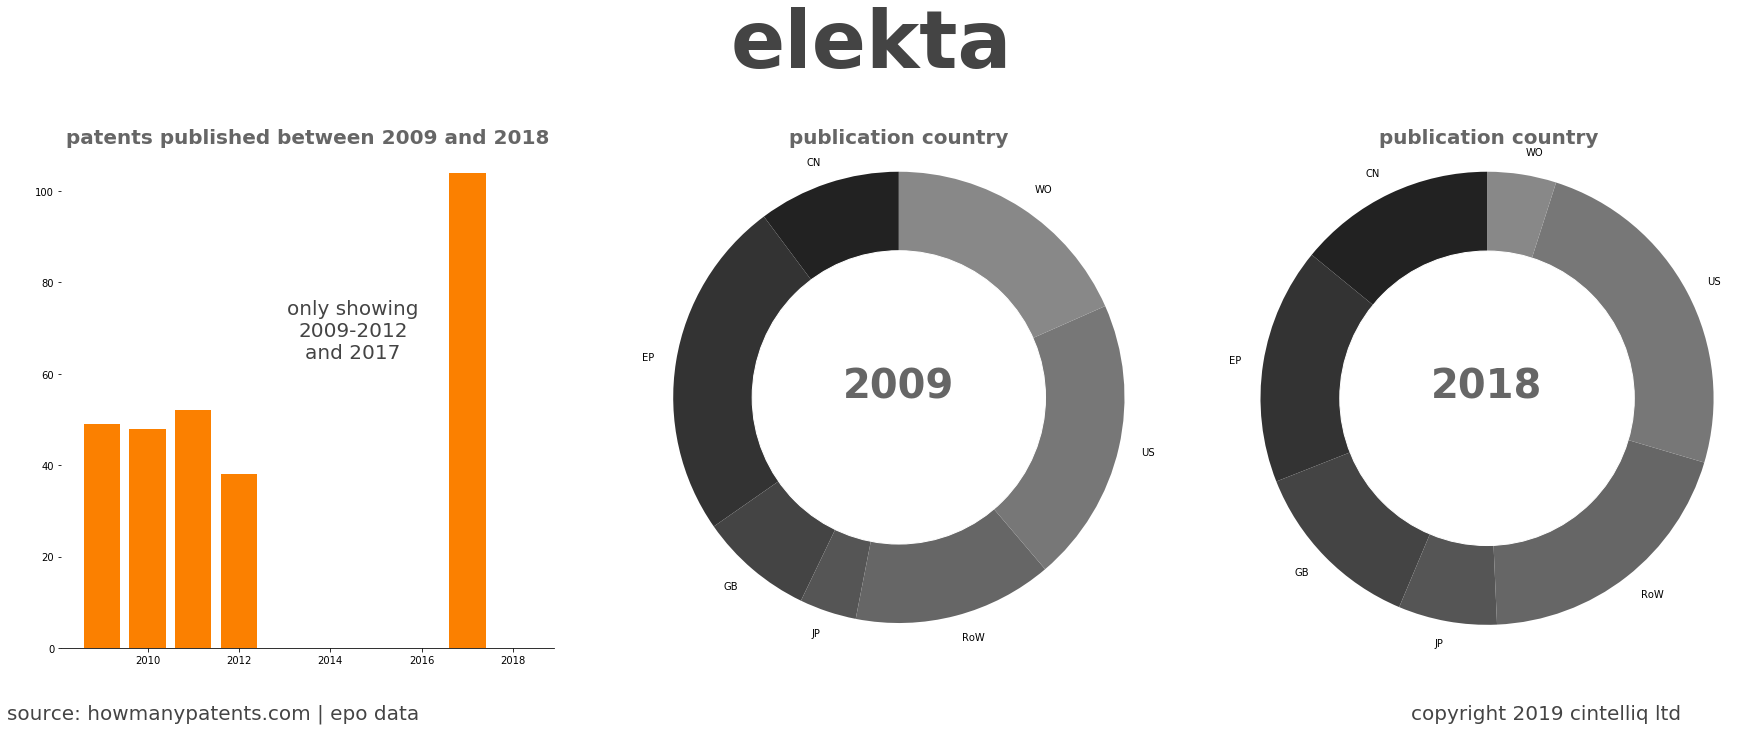 summary of patents for Elekta